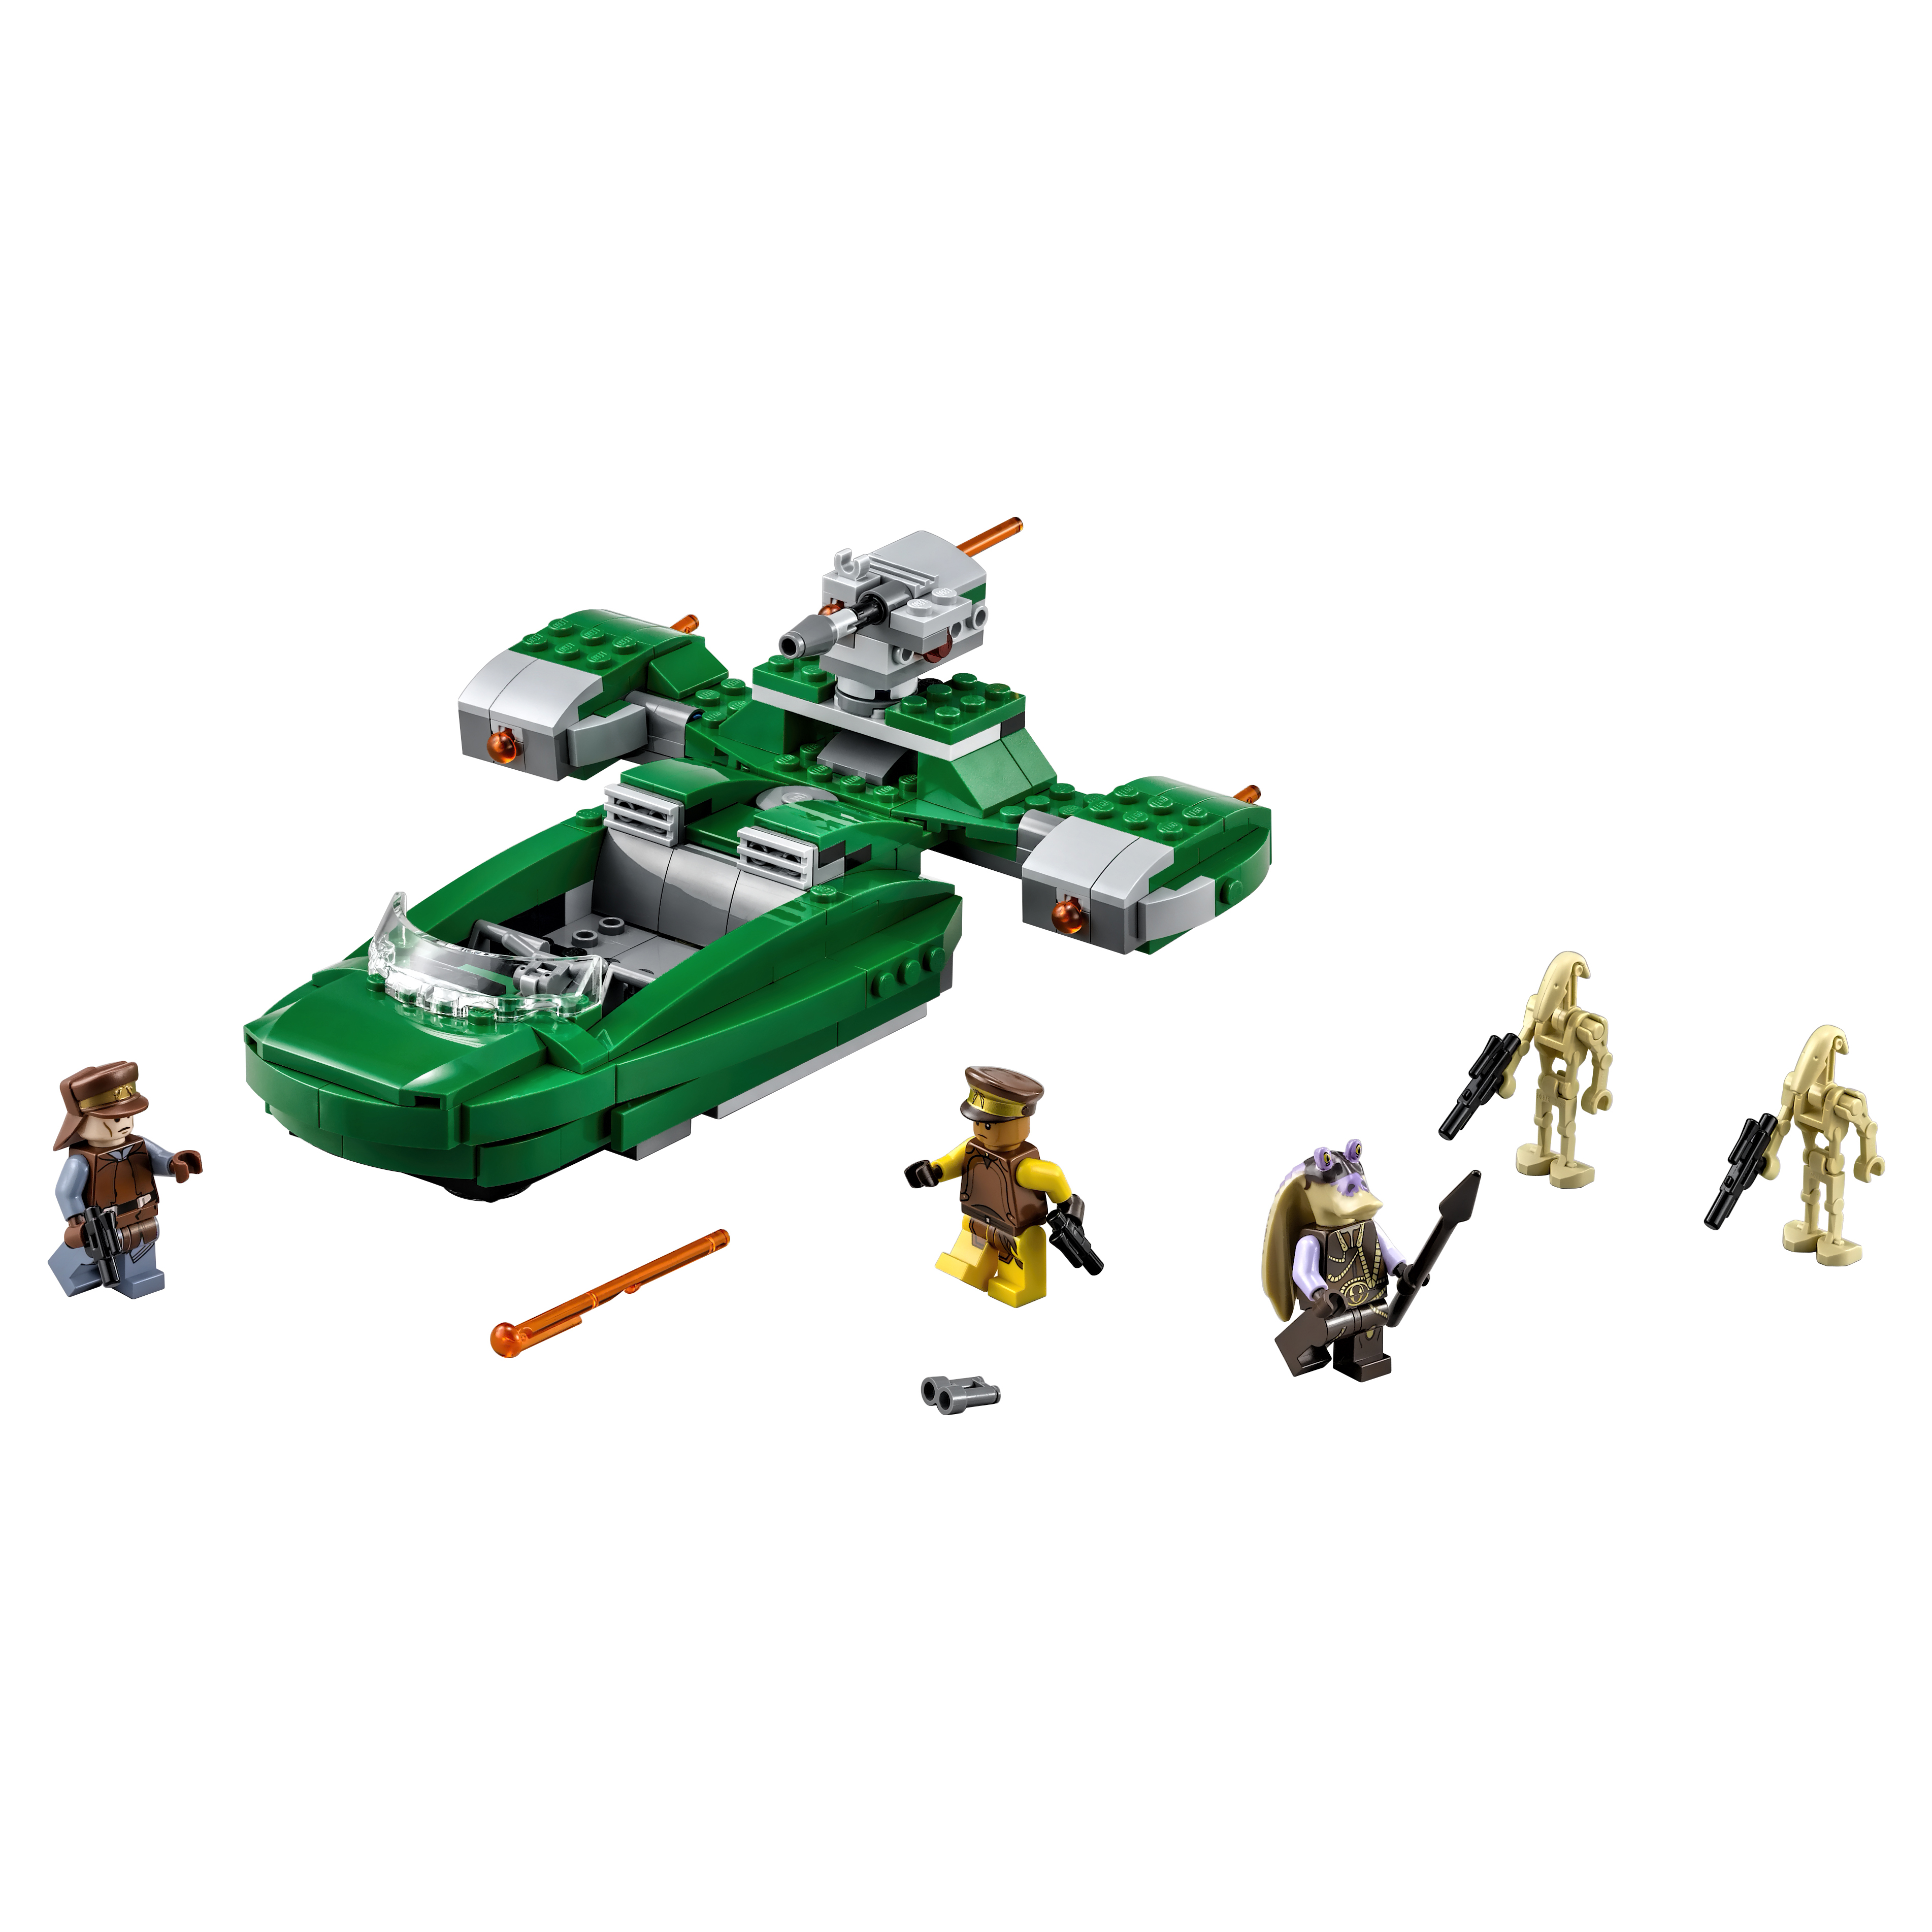 Конструктор LEGO Star Wars Флэш-спидер (Flash Speeder) (75091) конструктор lego star wars спидер рей reys speeder 75099